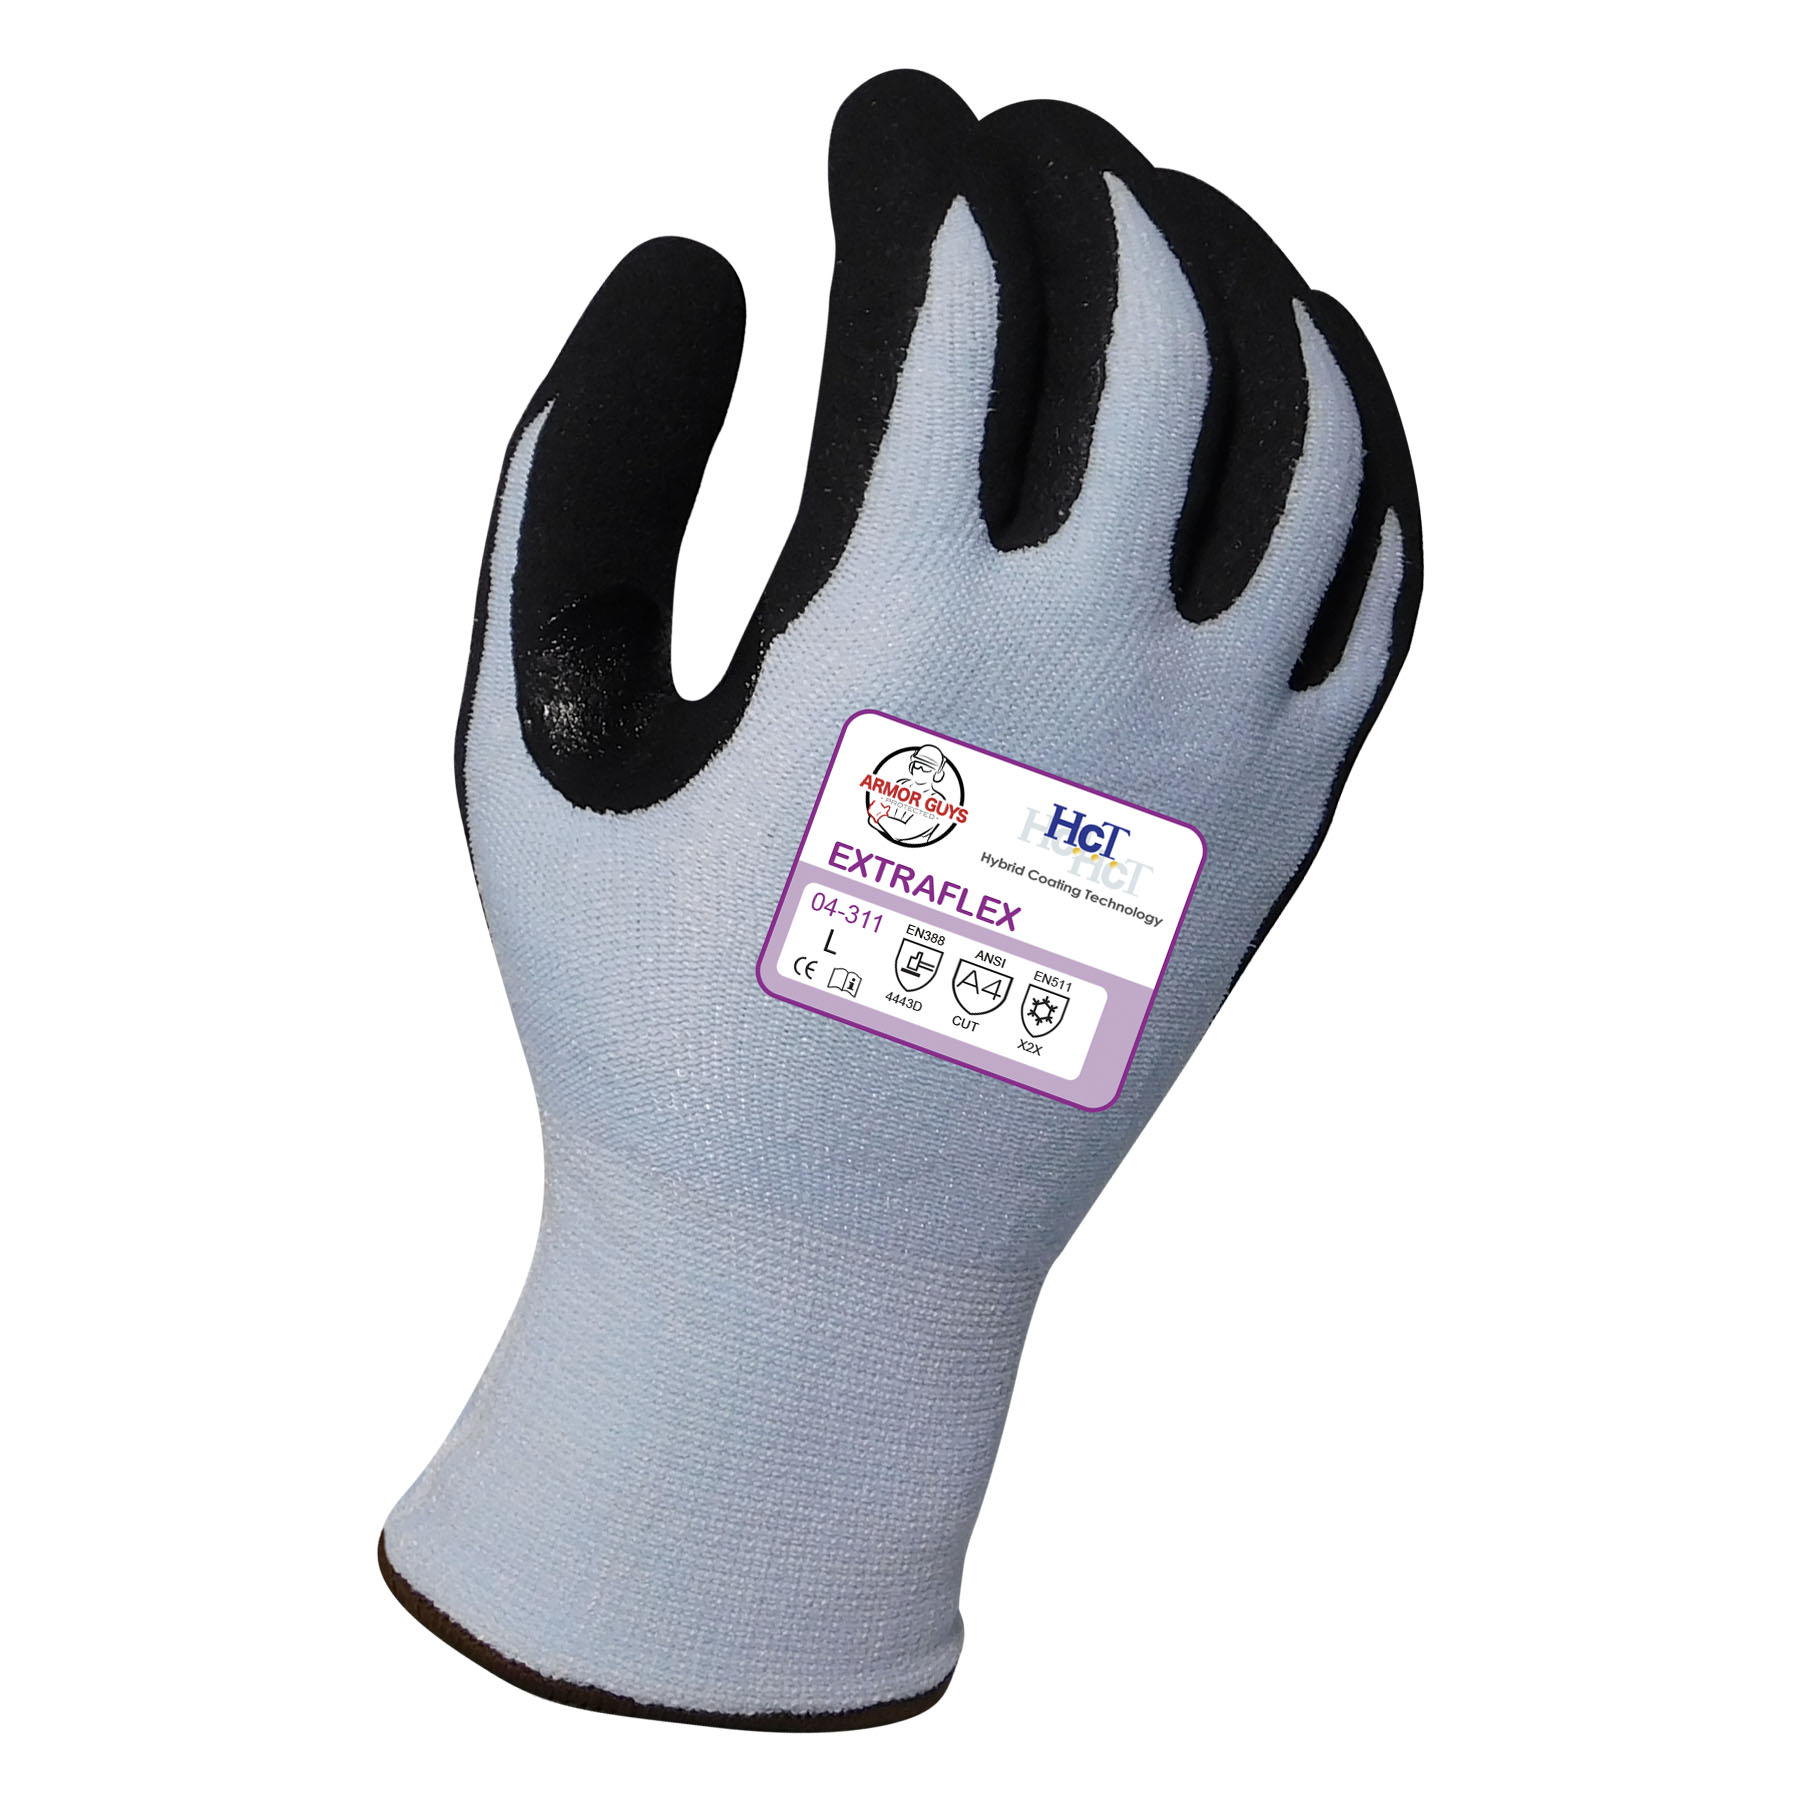 Armor Guys Extraflex Gloves - Spill Control